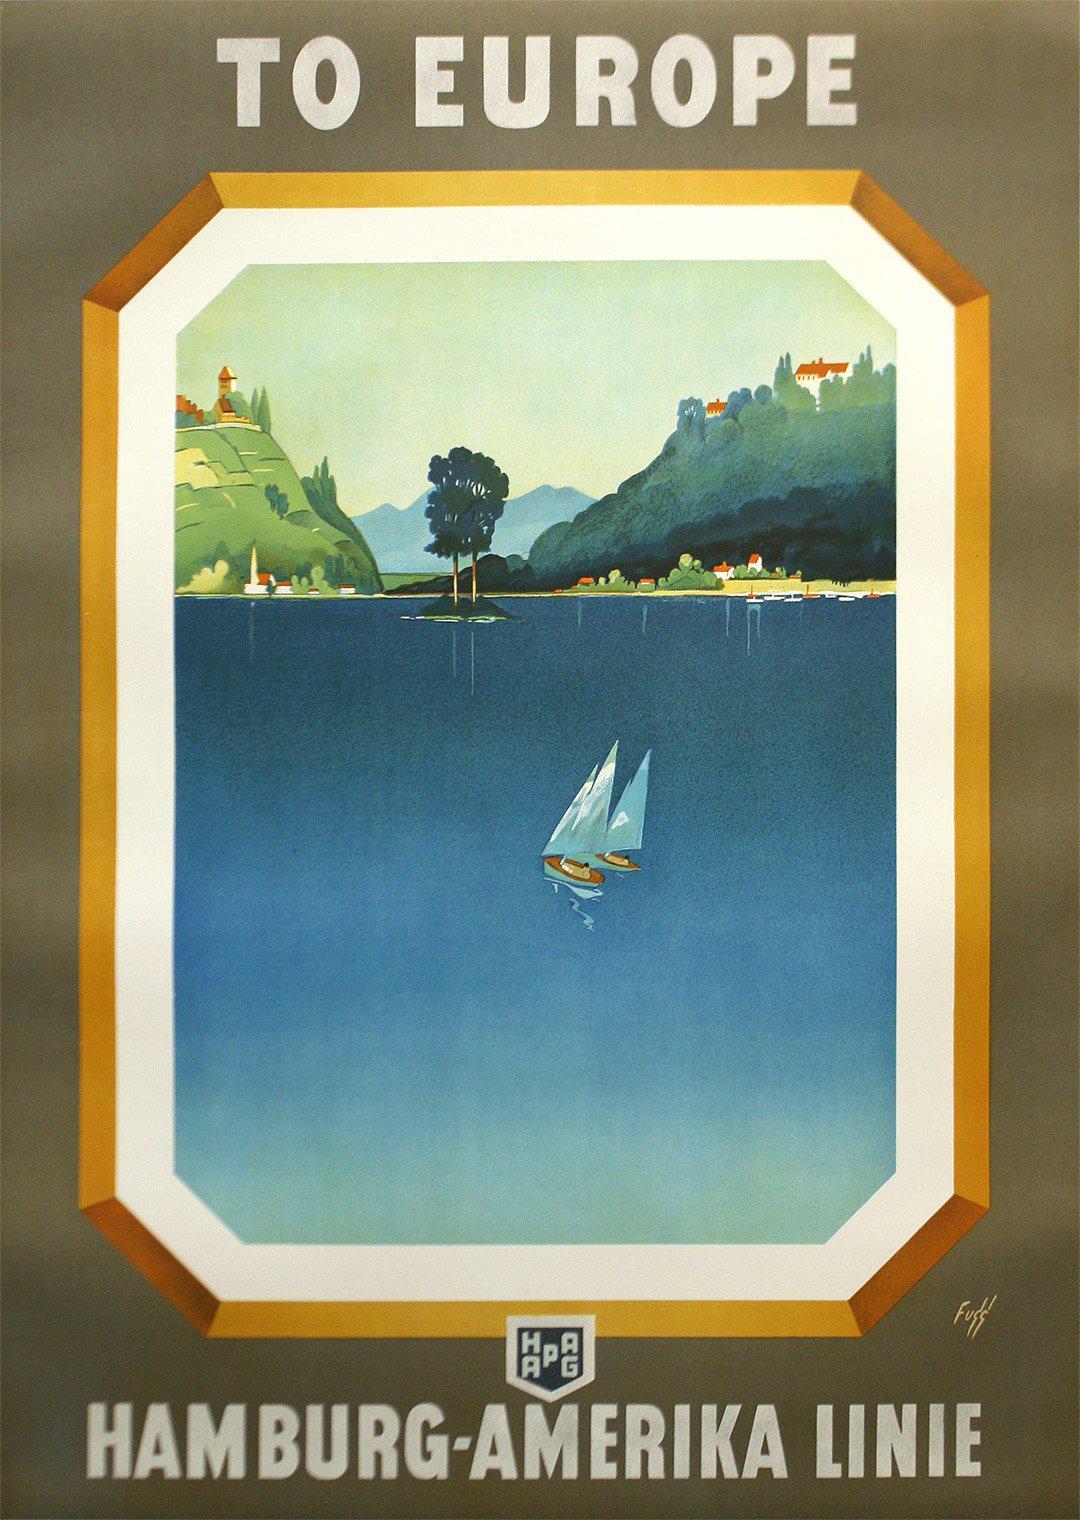 Original Vintage Hamburg Amerika Line to Europe Travel Poster by Albert Fuss c1935 Sailboat